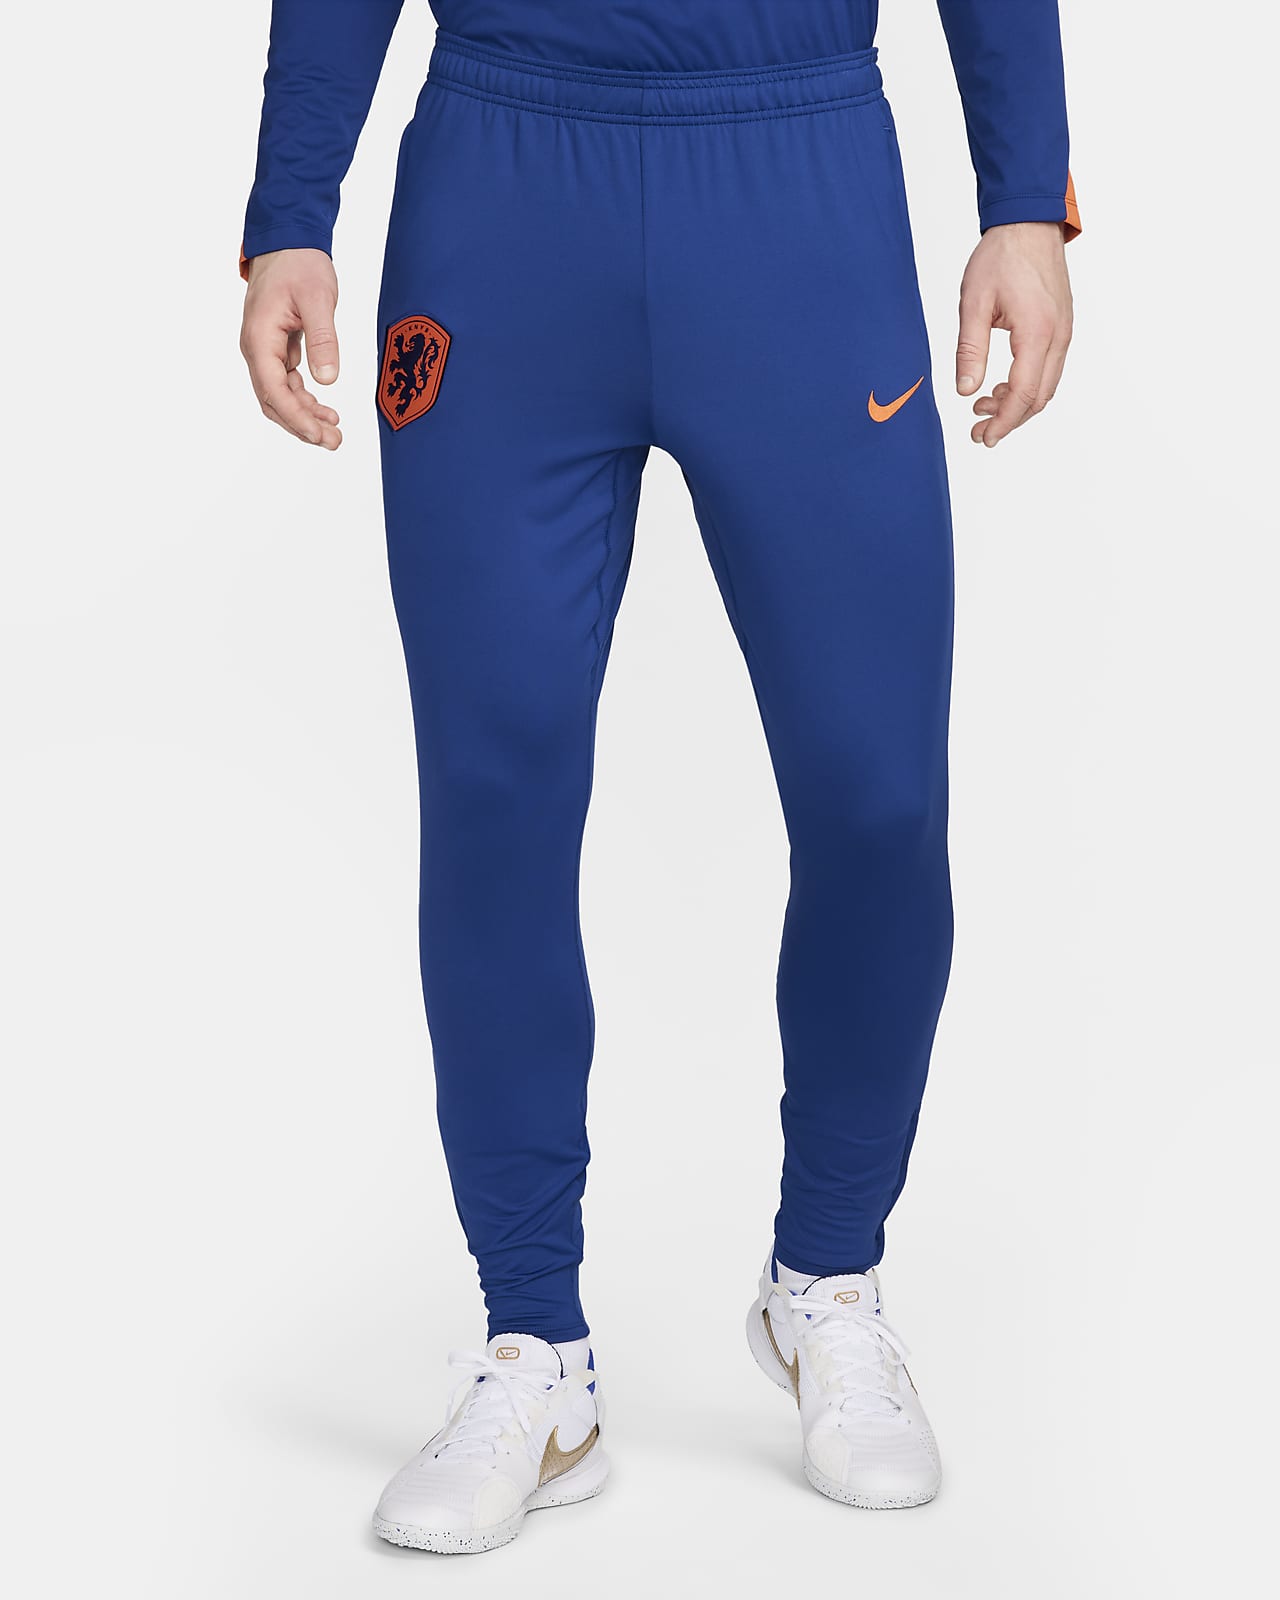 Netherlands Strike Men's Nike Dri-FIT Football Knit Pants